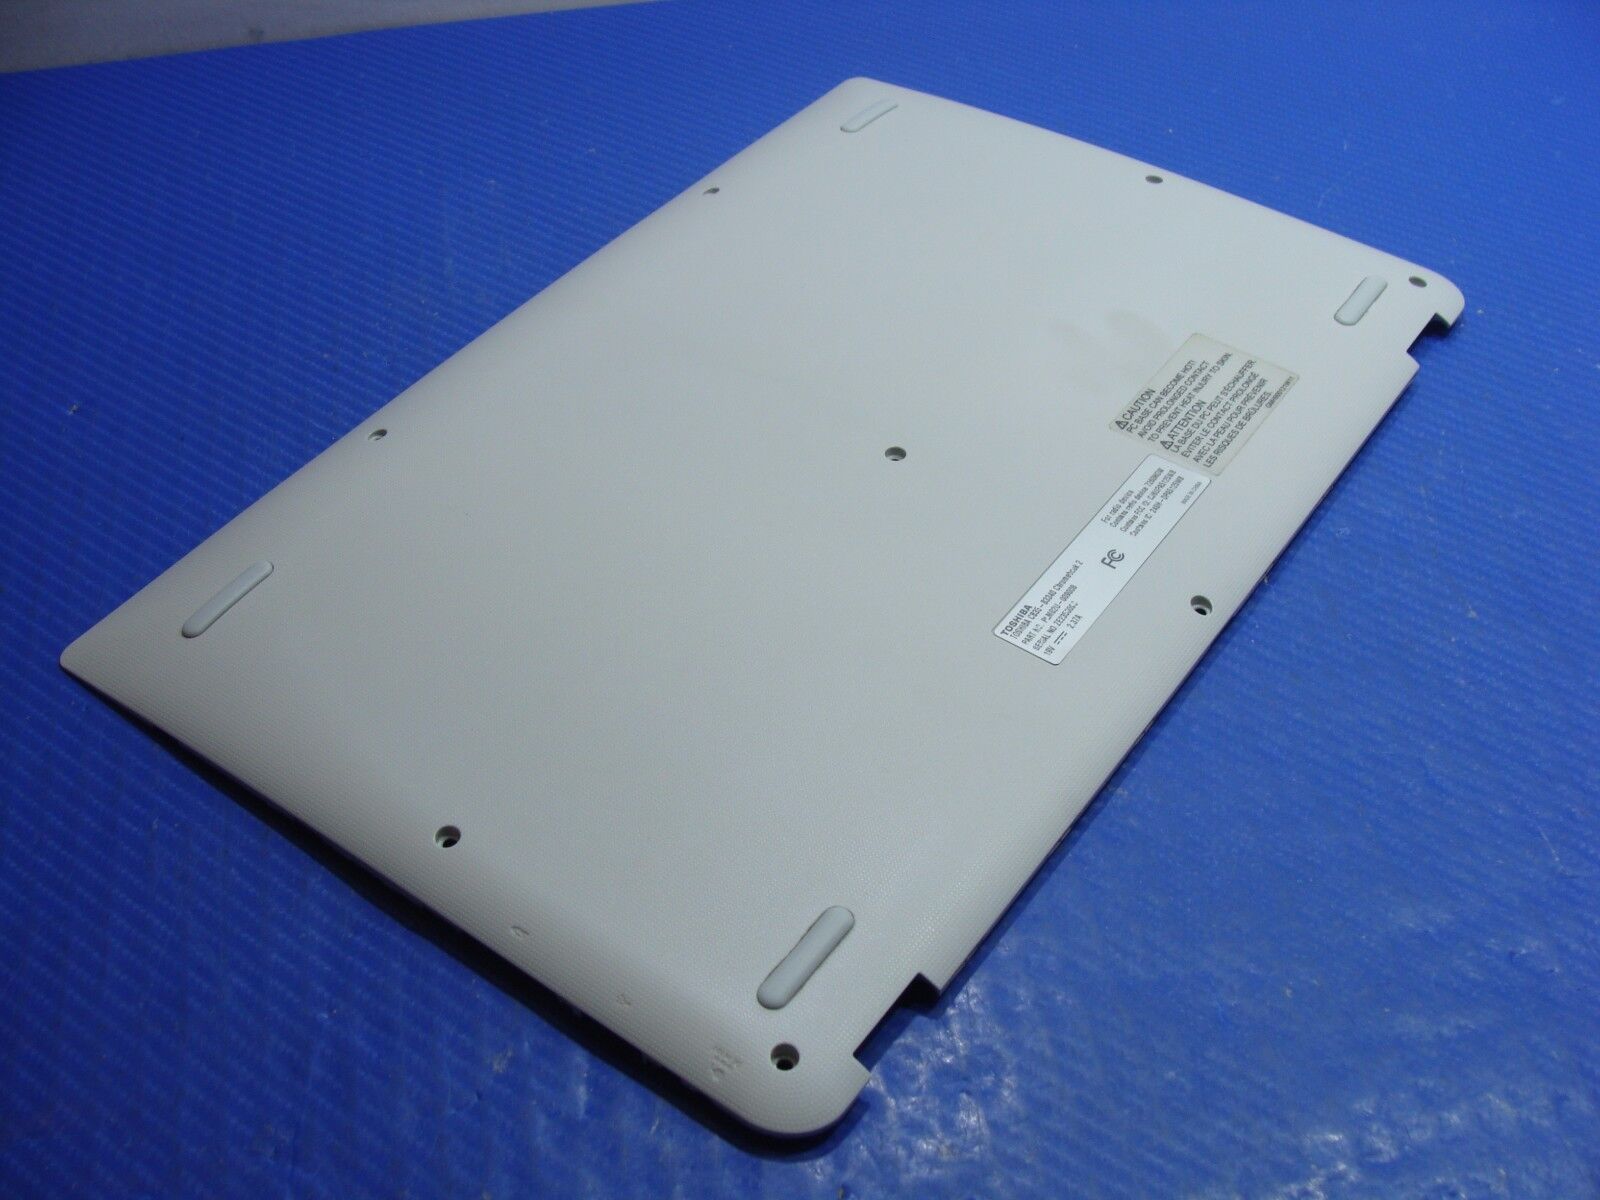 Toshiba Chromebook 2 13.3 CB35-B3340 Genuine Laptop Bottom Case 36BUHBA0I